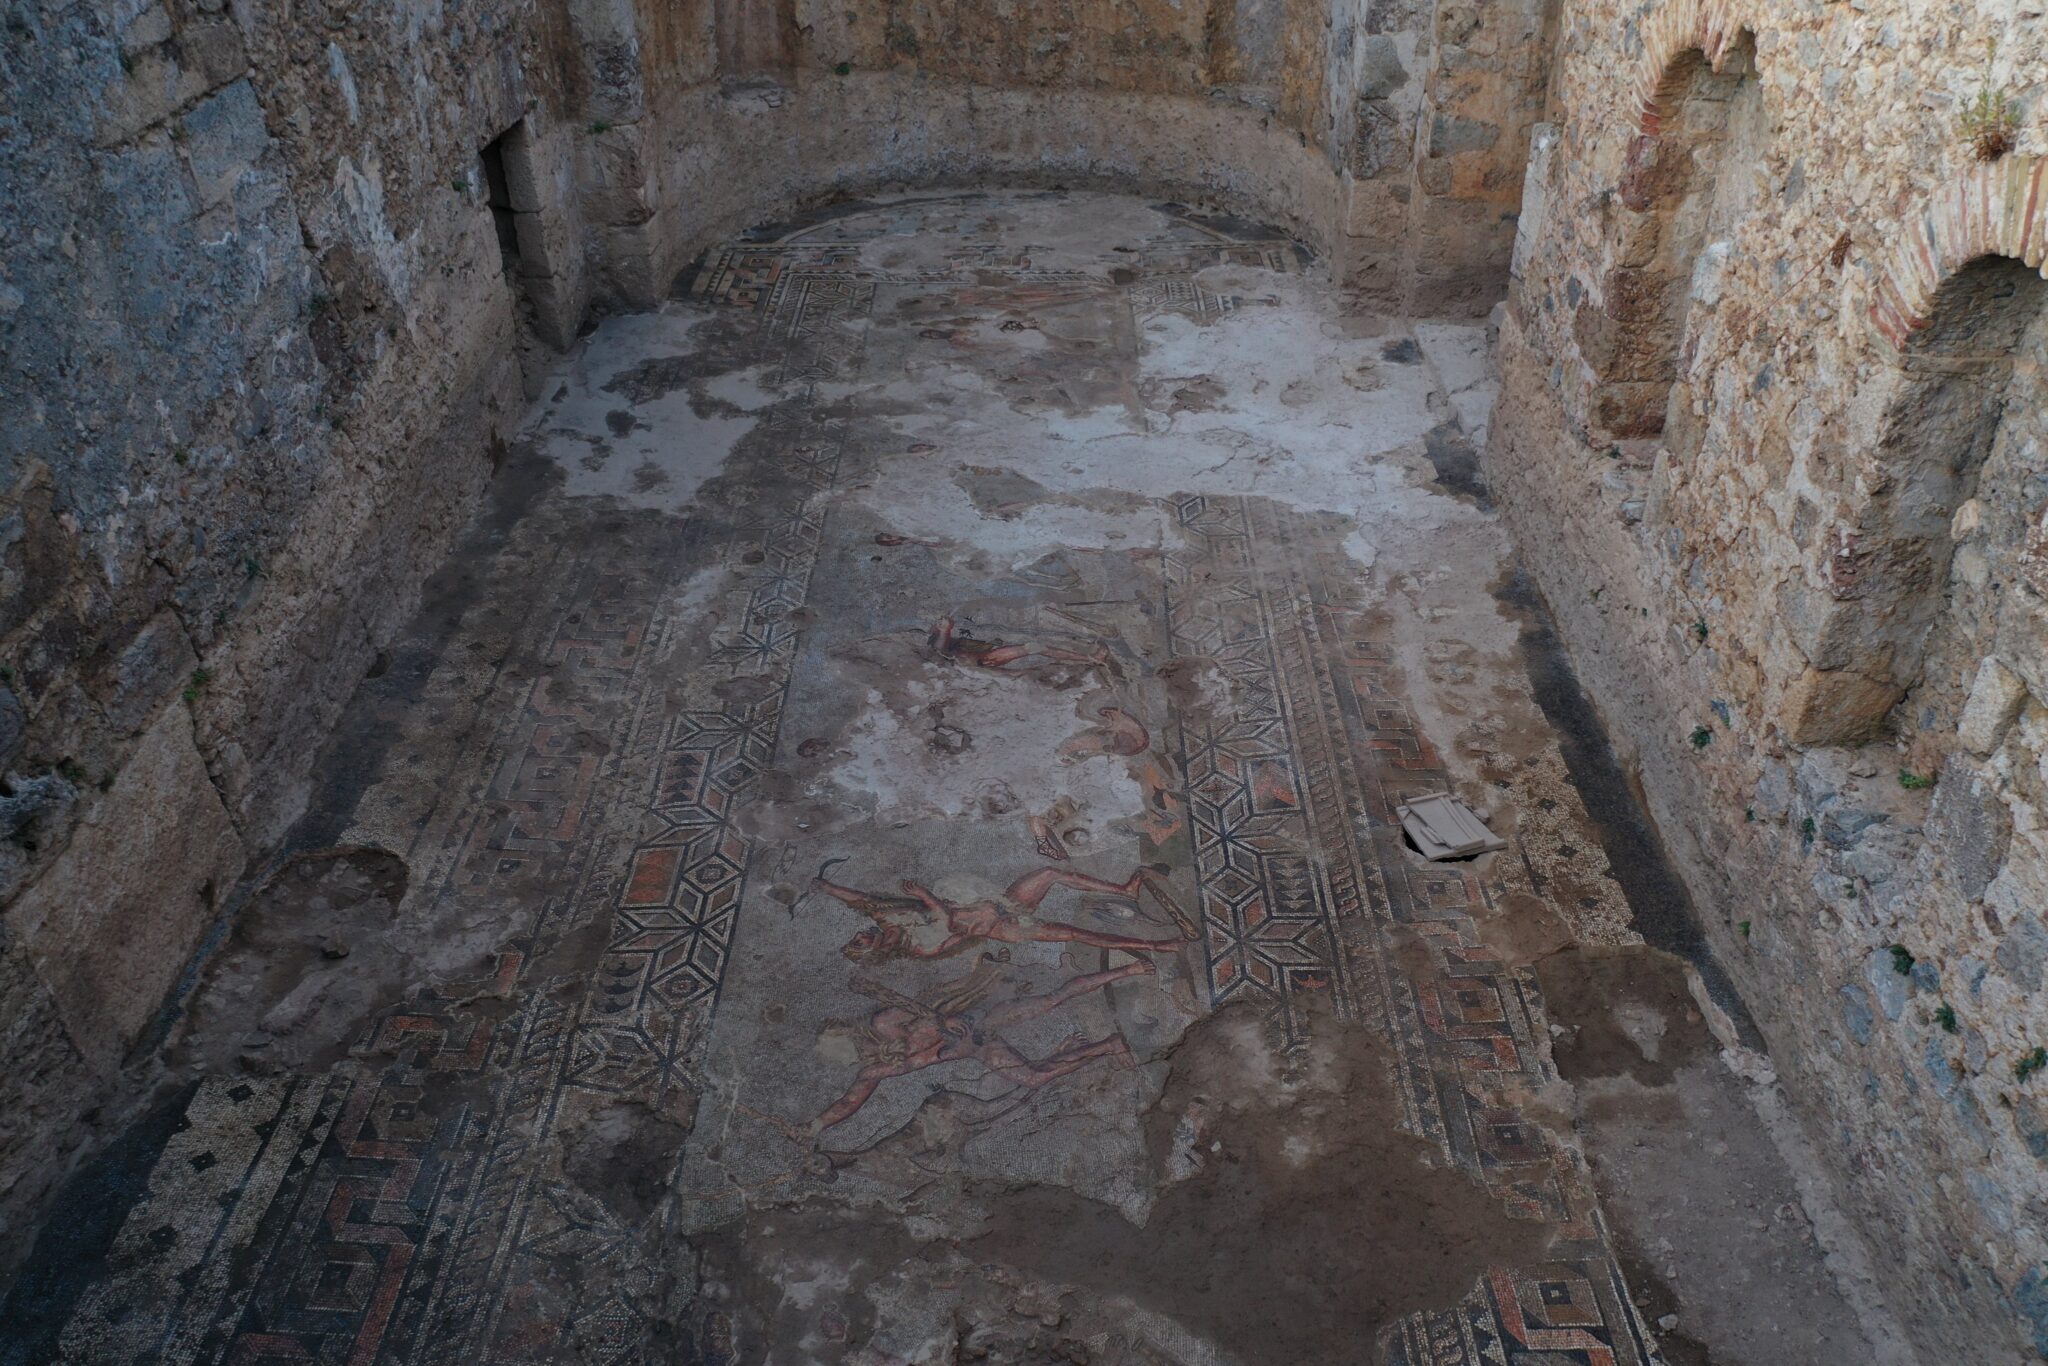 1,765-square-foot Herakles mosaic found